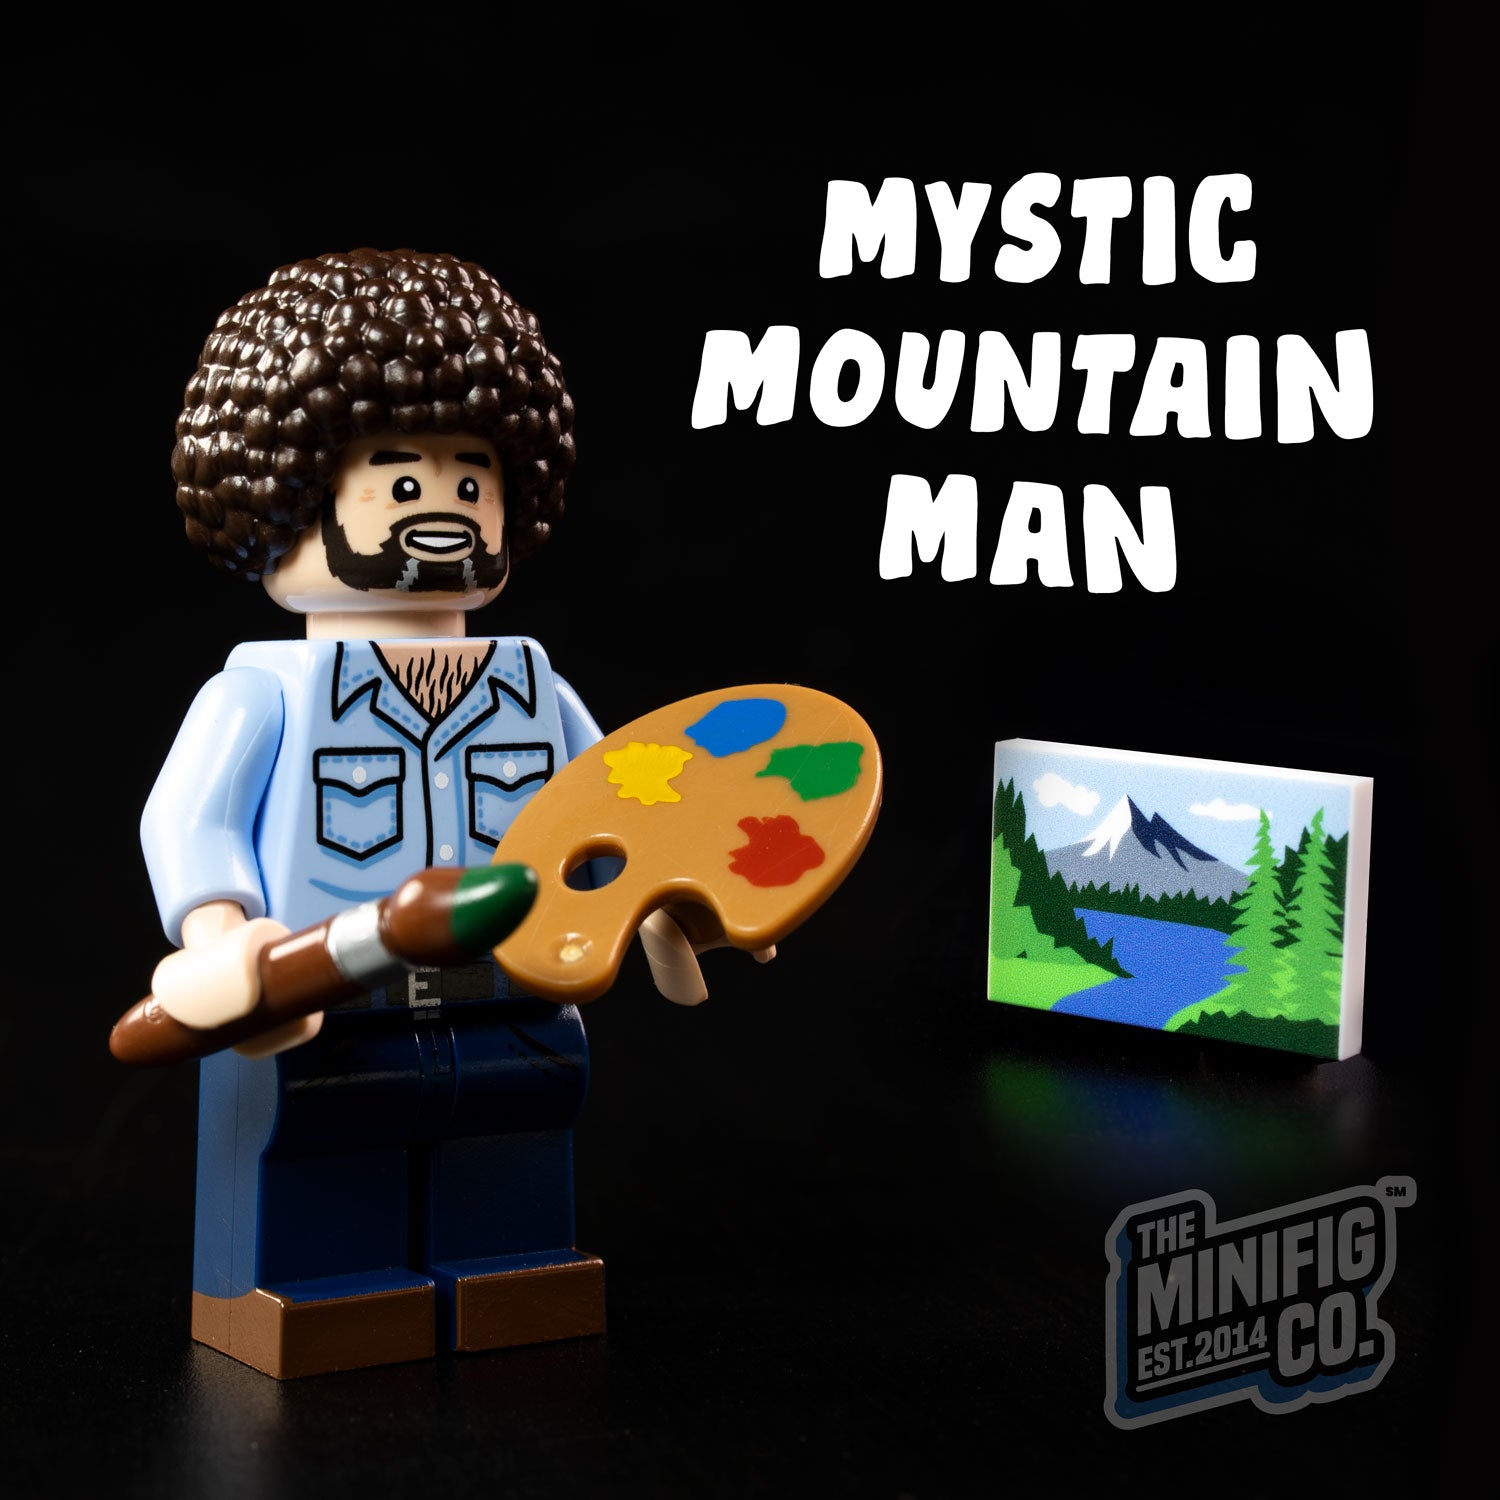 Custom Printed Lego - Mystic Mountain Man - The Minifig Co.